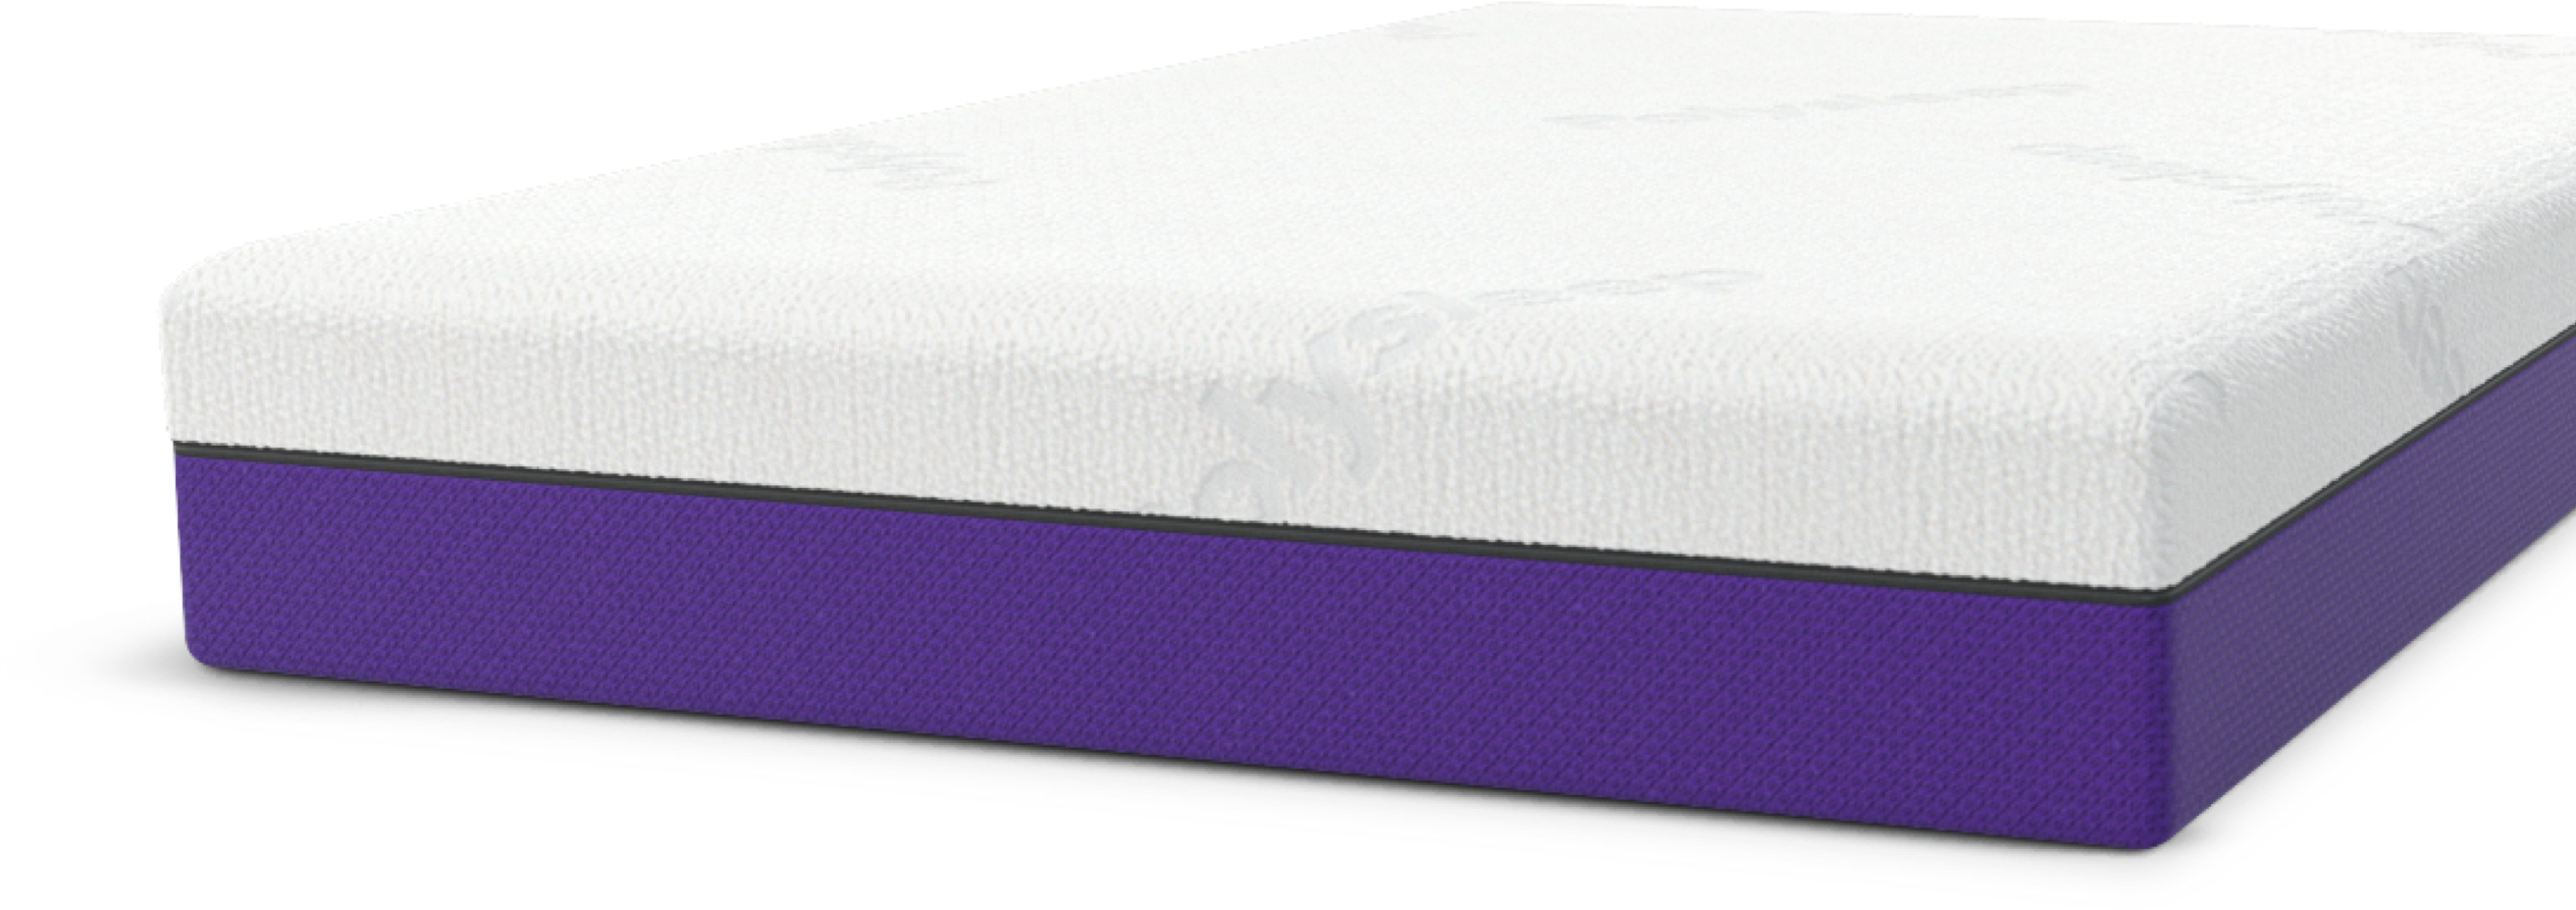 Polysleep memory foam mattress with support frame